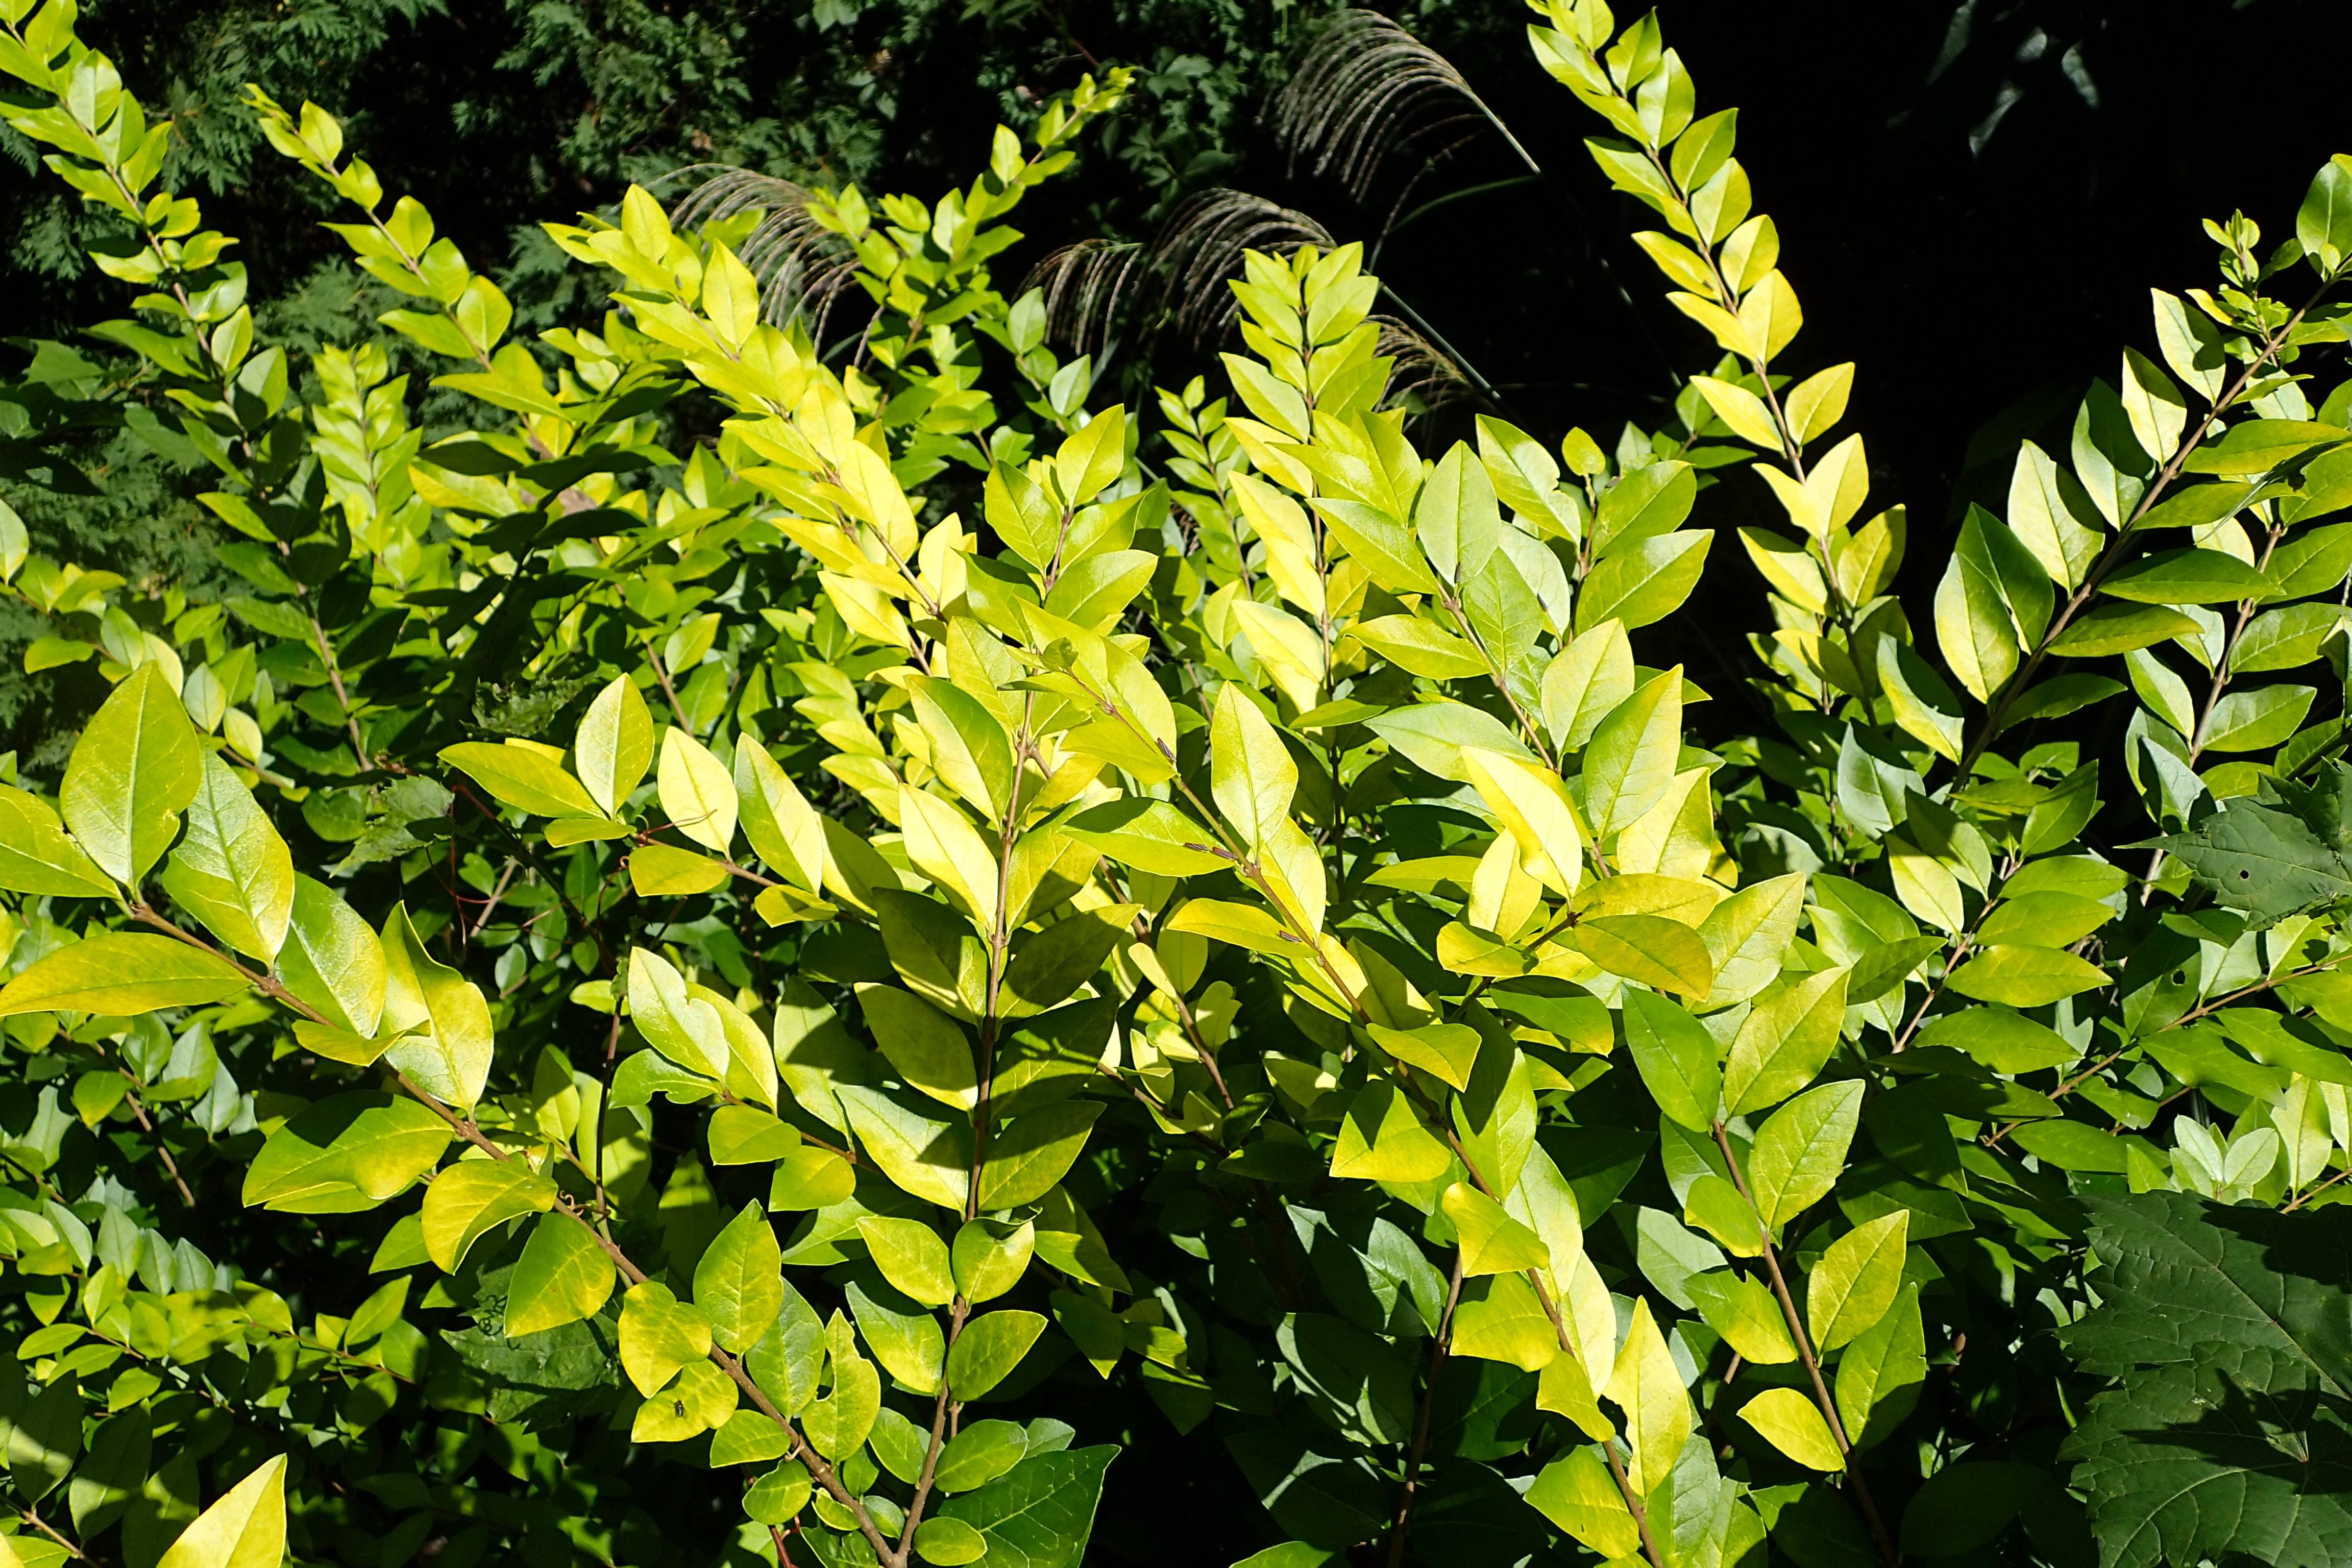 lime leaves on brown stems
